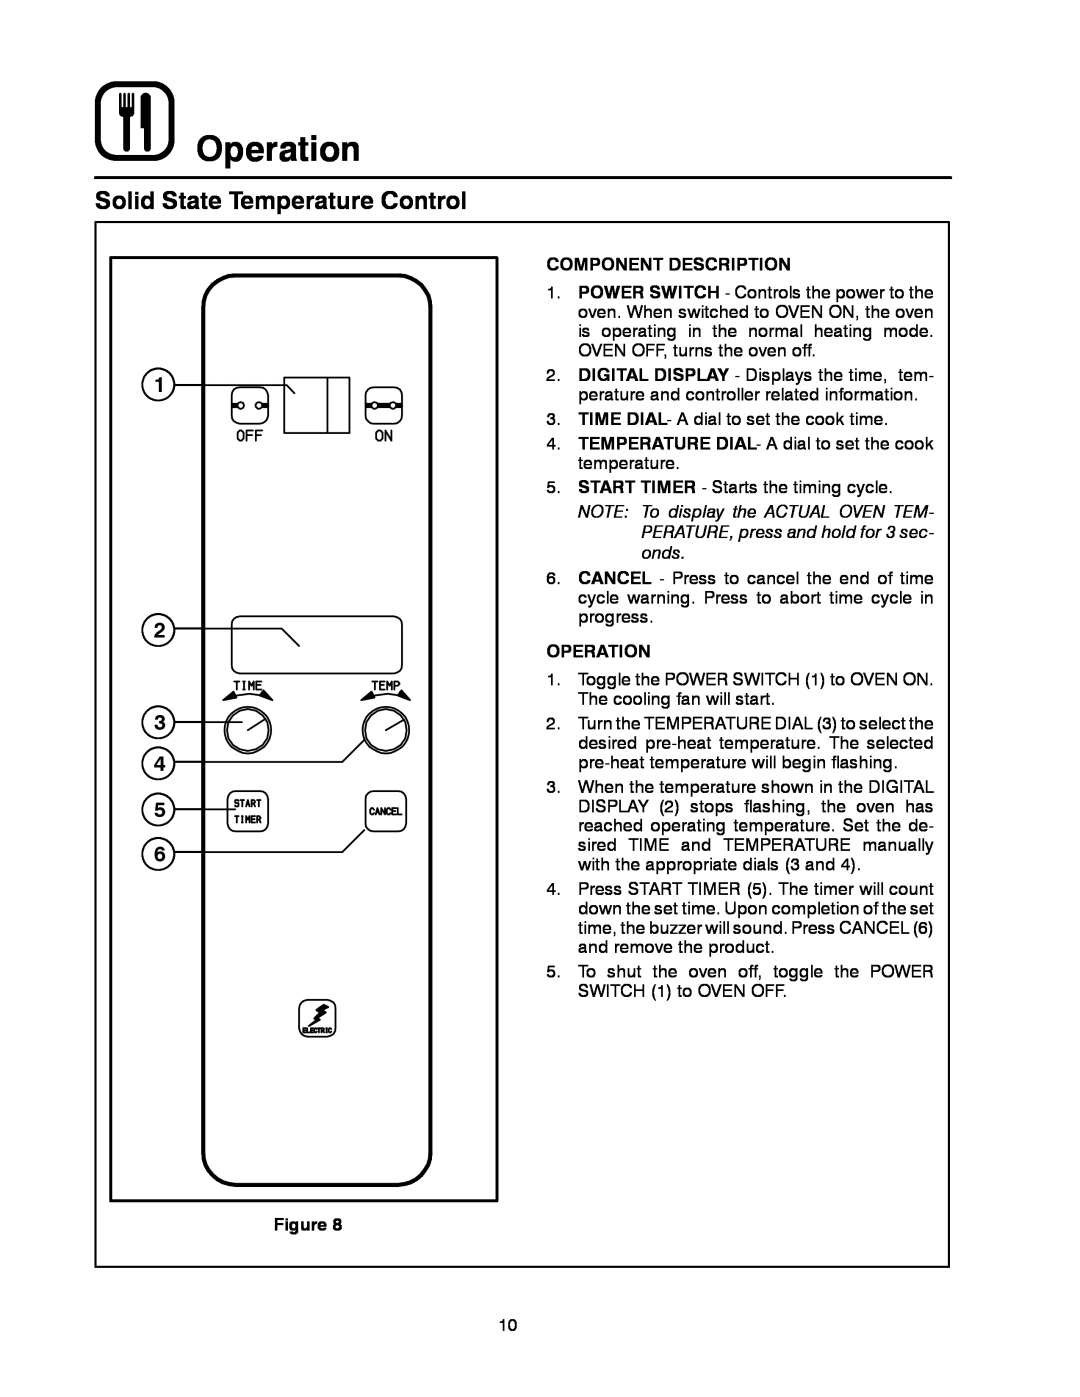 Blodgett 1400 SERIES manual Operation, Solid State Temperature Control, Component Description 